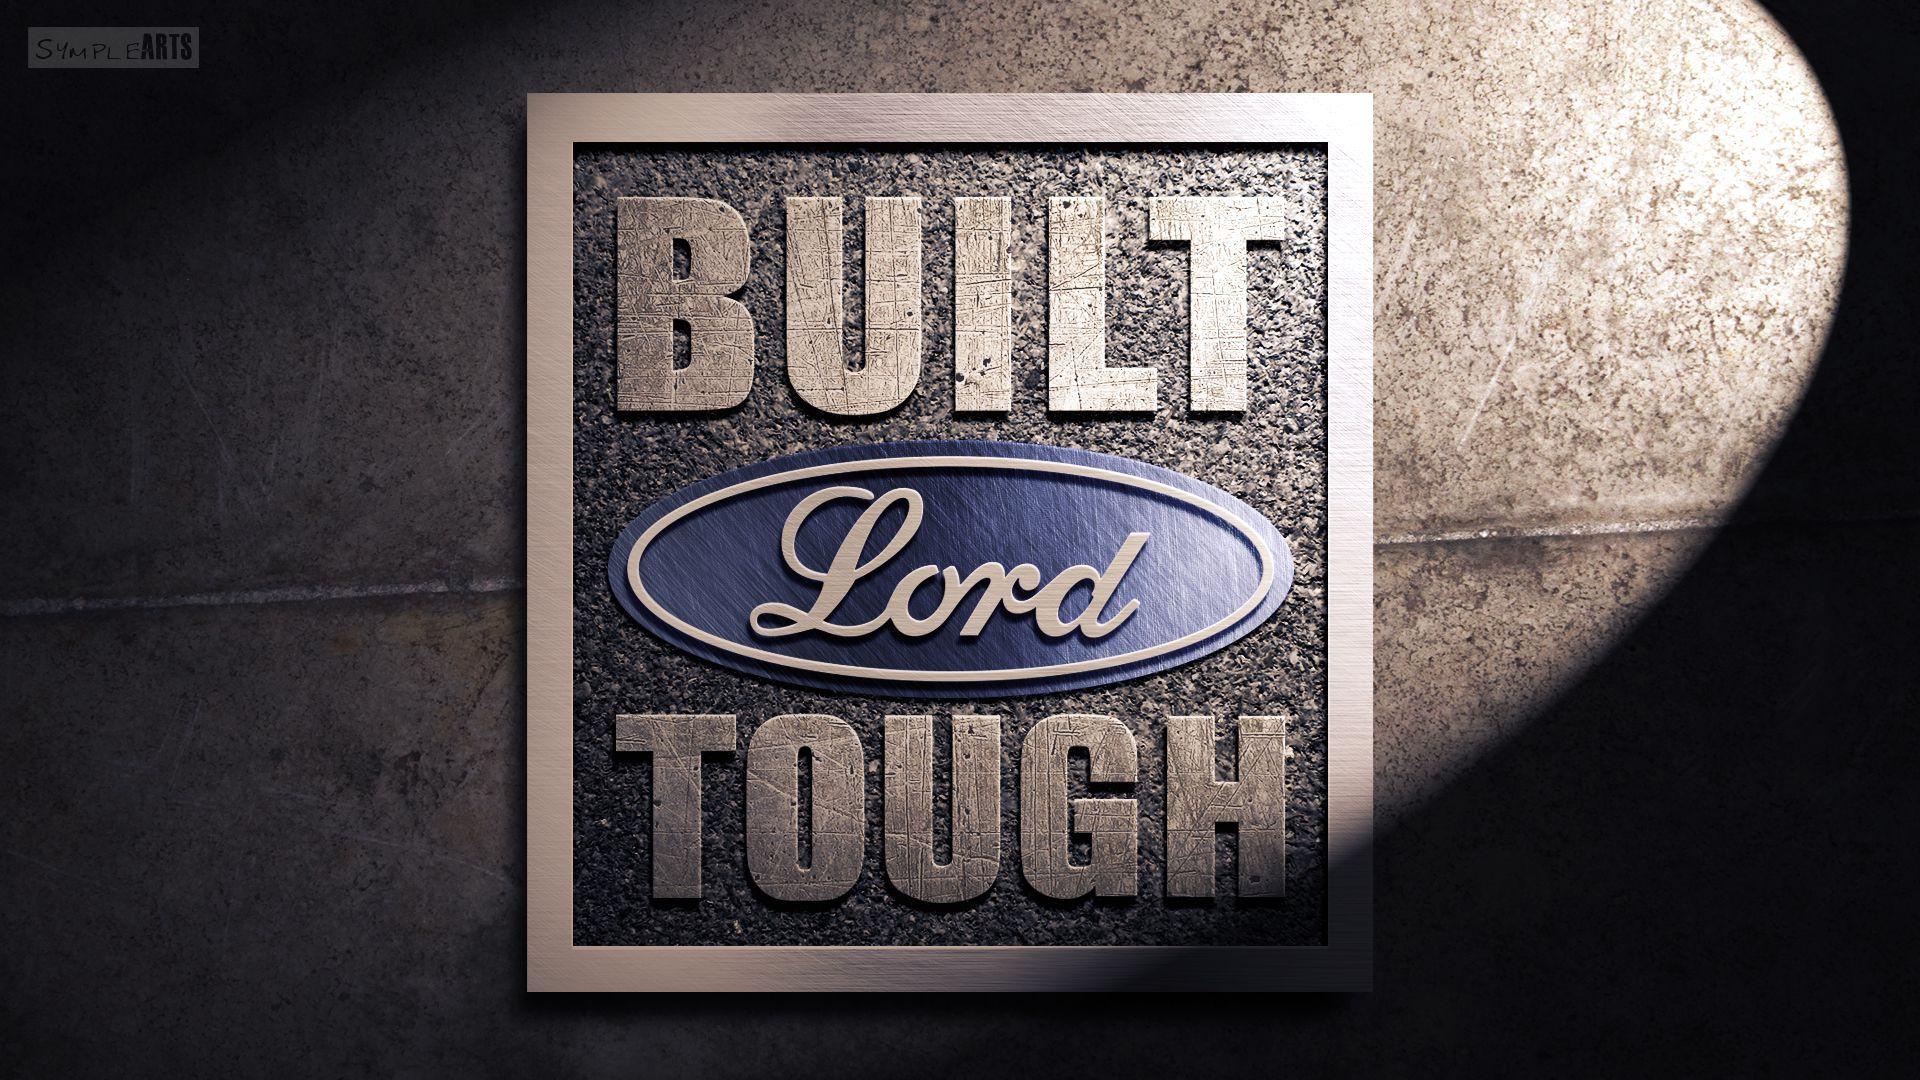 Built Ford Tough Logo - Built Ford Tough Logo Wallpaper | Best Cool Wallpaper HD Download ...